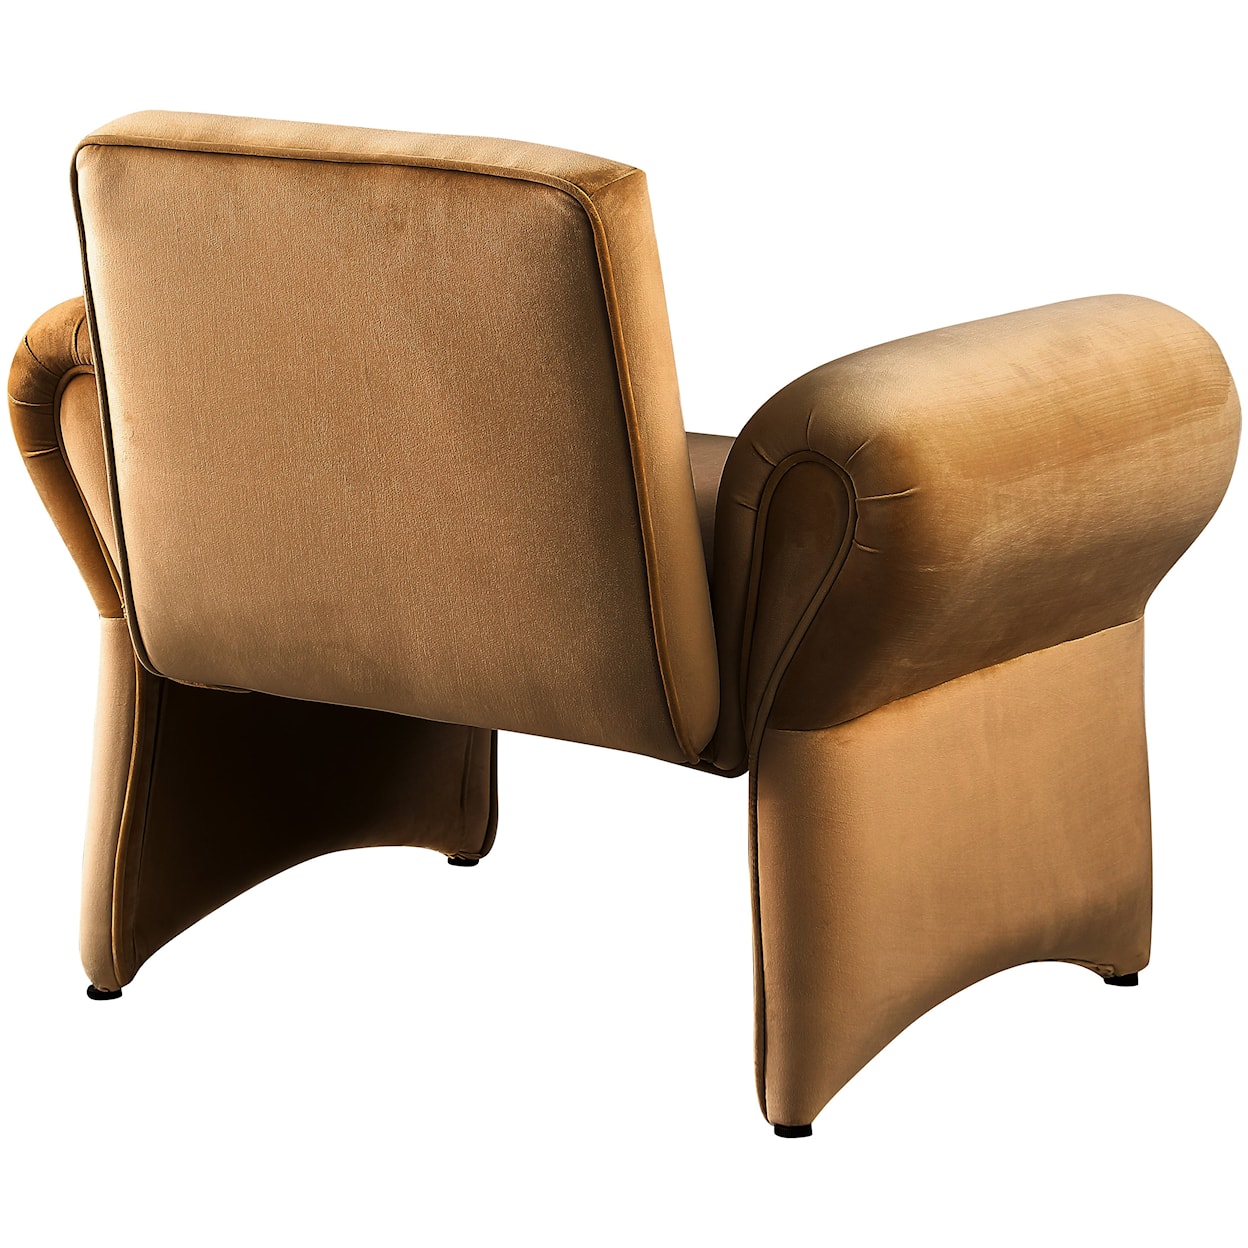 Meridian Furniture Fleurette Accent Chair